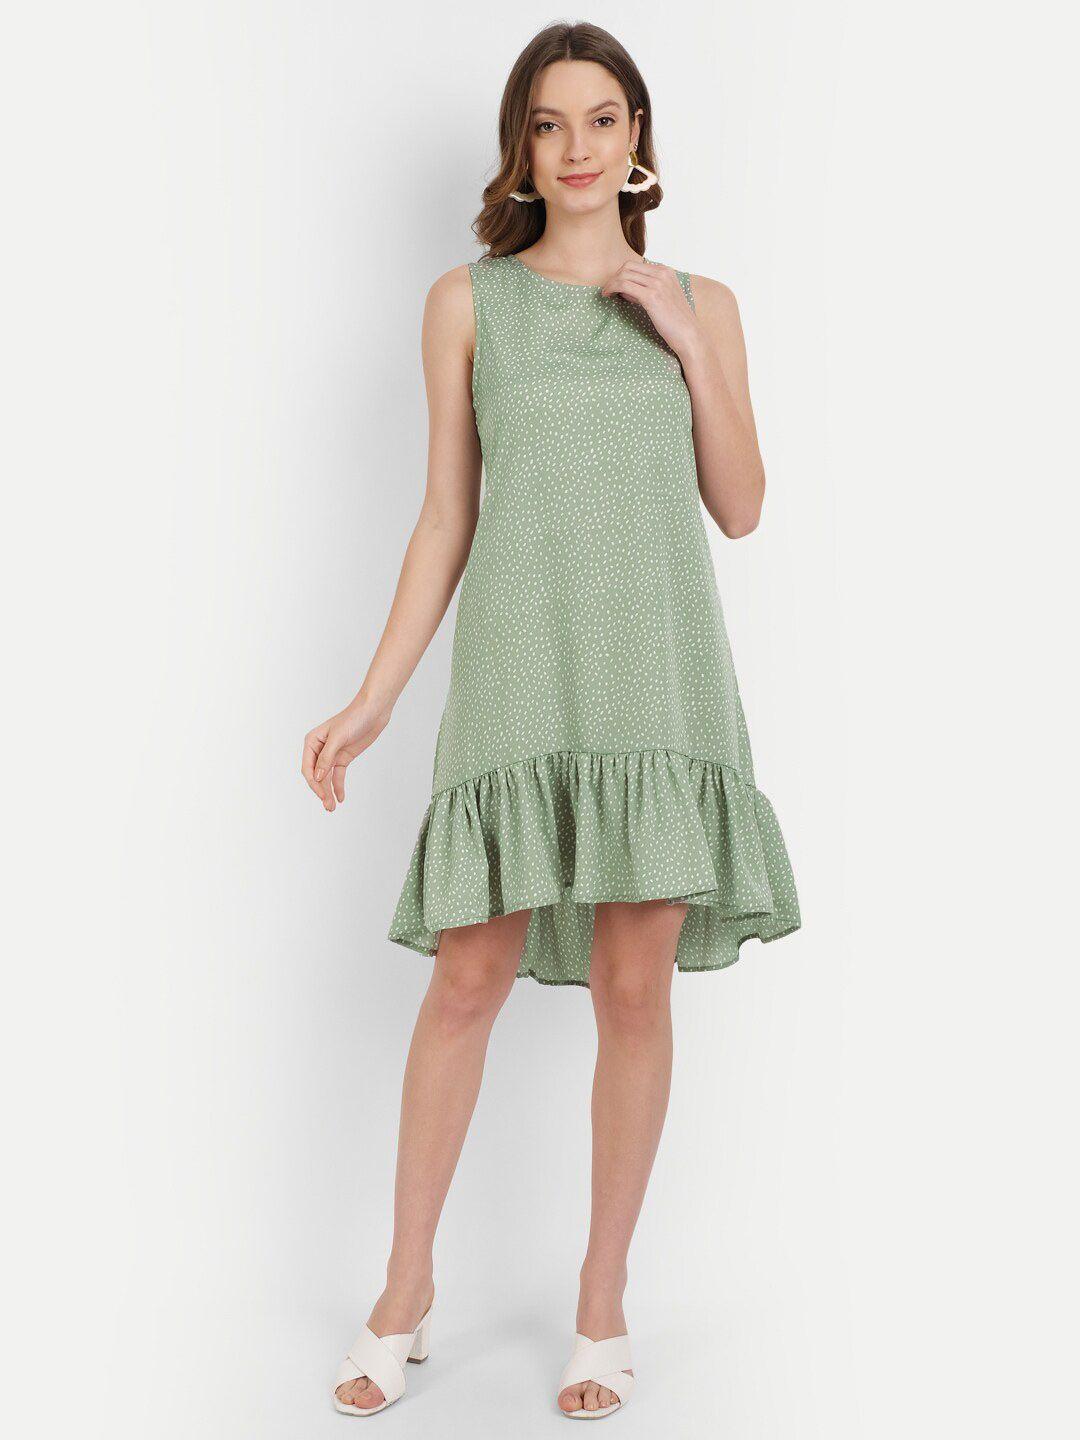 rediscover-fashion-women-green-crepe-a-line-polka-dot-frill-dress